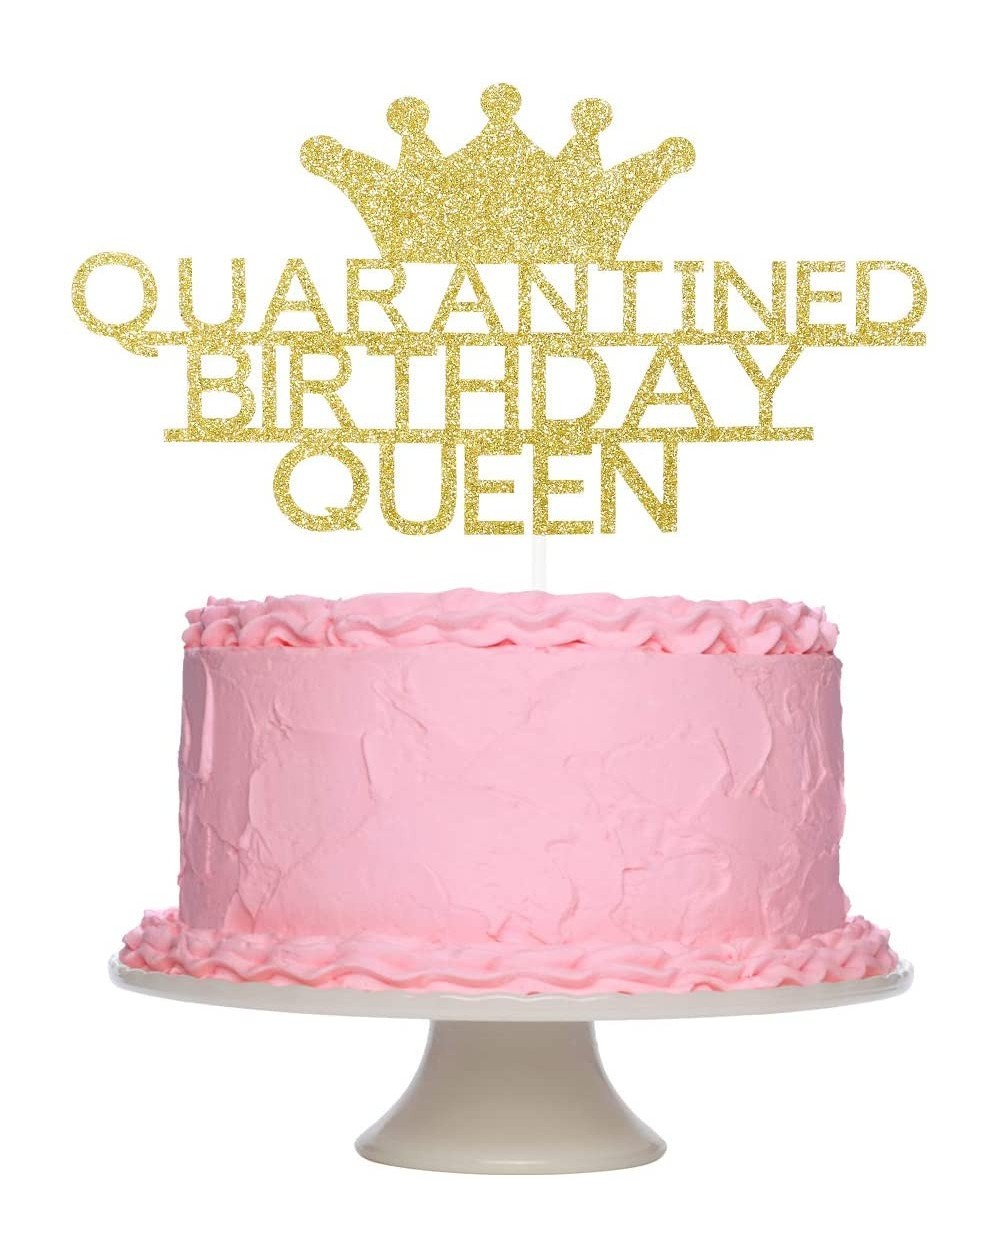 Cake & Cupcake Toppers Quarantined Birthday Queen Cake Topper - Quarantined Birthday Cake Topper Decorations- Girls Women Fem...